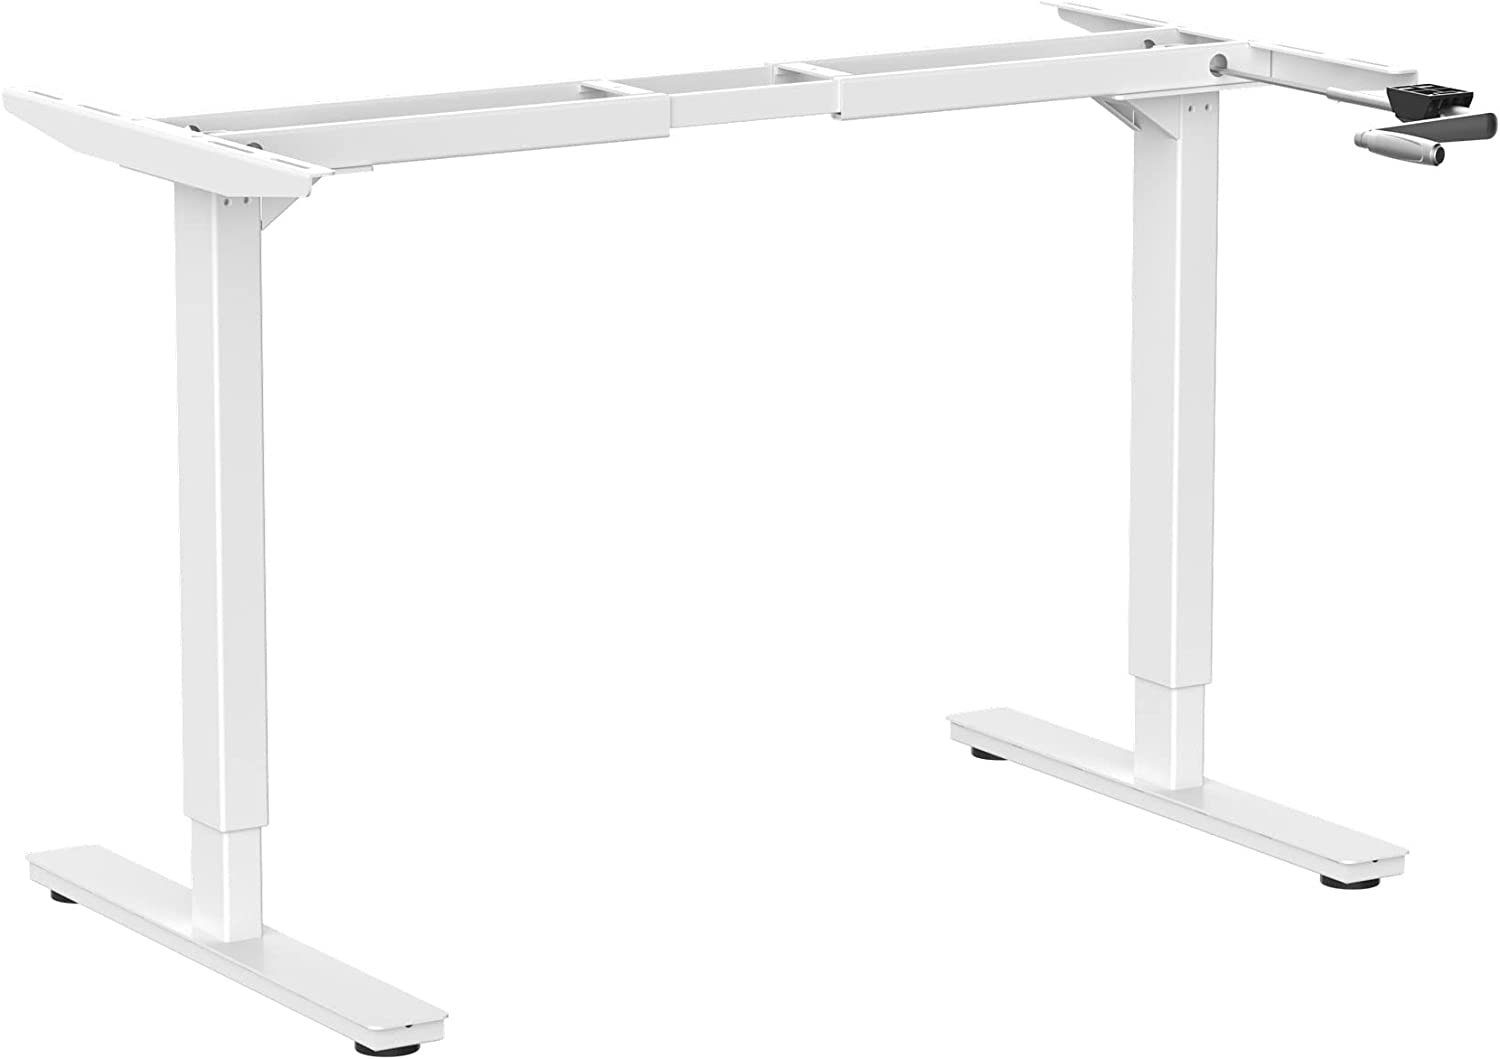 Kurbel verstellbar Budget Tischplatten, für Höhenverstellbarer Schreibtisch Schreibtisch, gängigen durch verstellbares Ergotopia Desktopia Höhenverstellbarkeit Tischgestell, Weiß Breite alle Per Kurbel